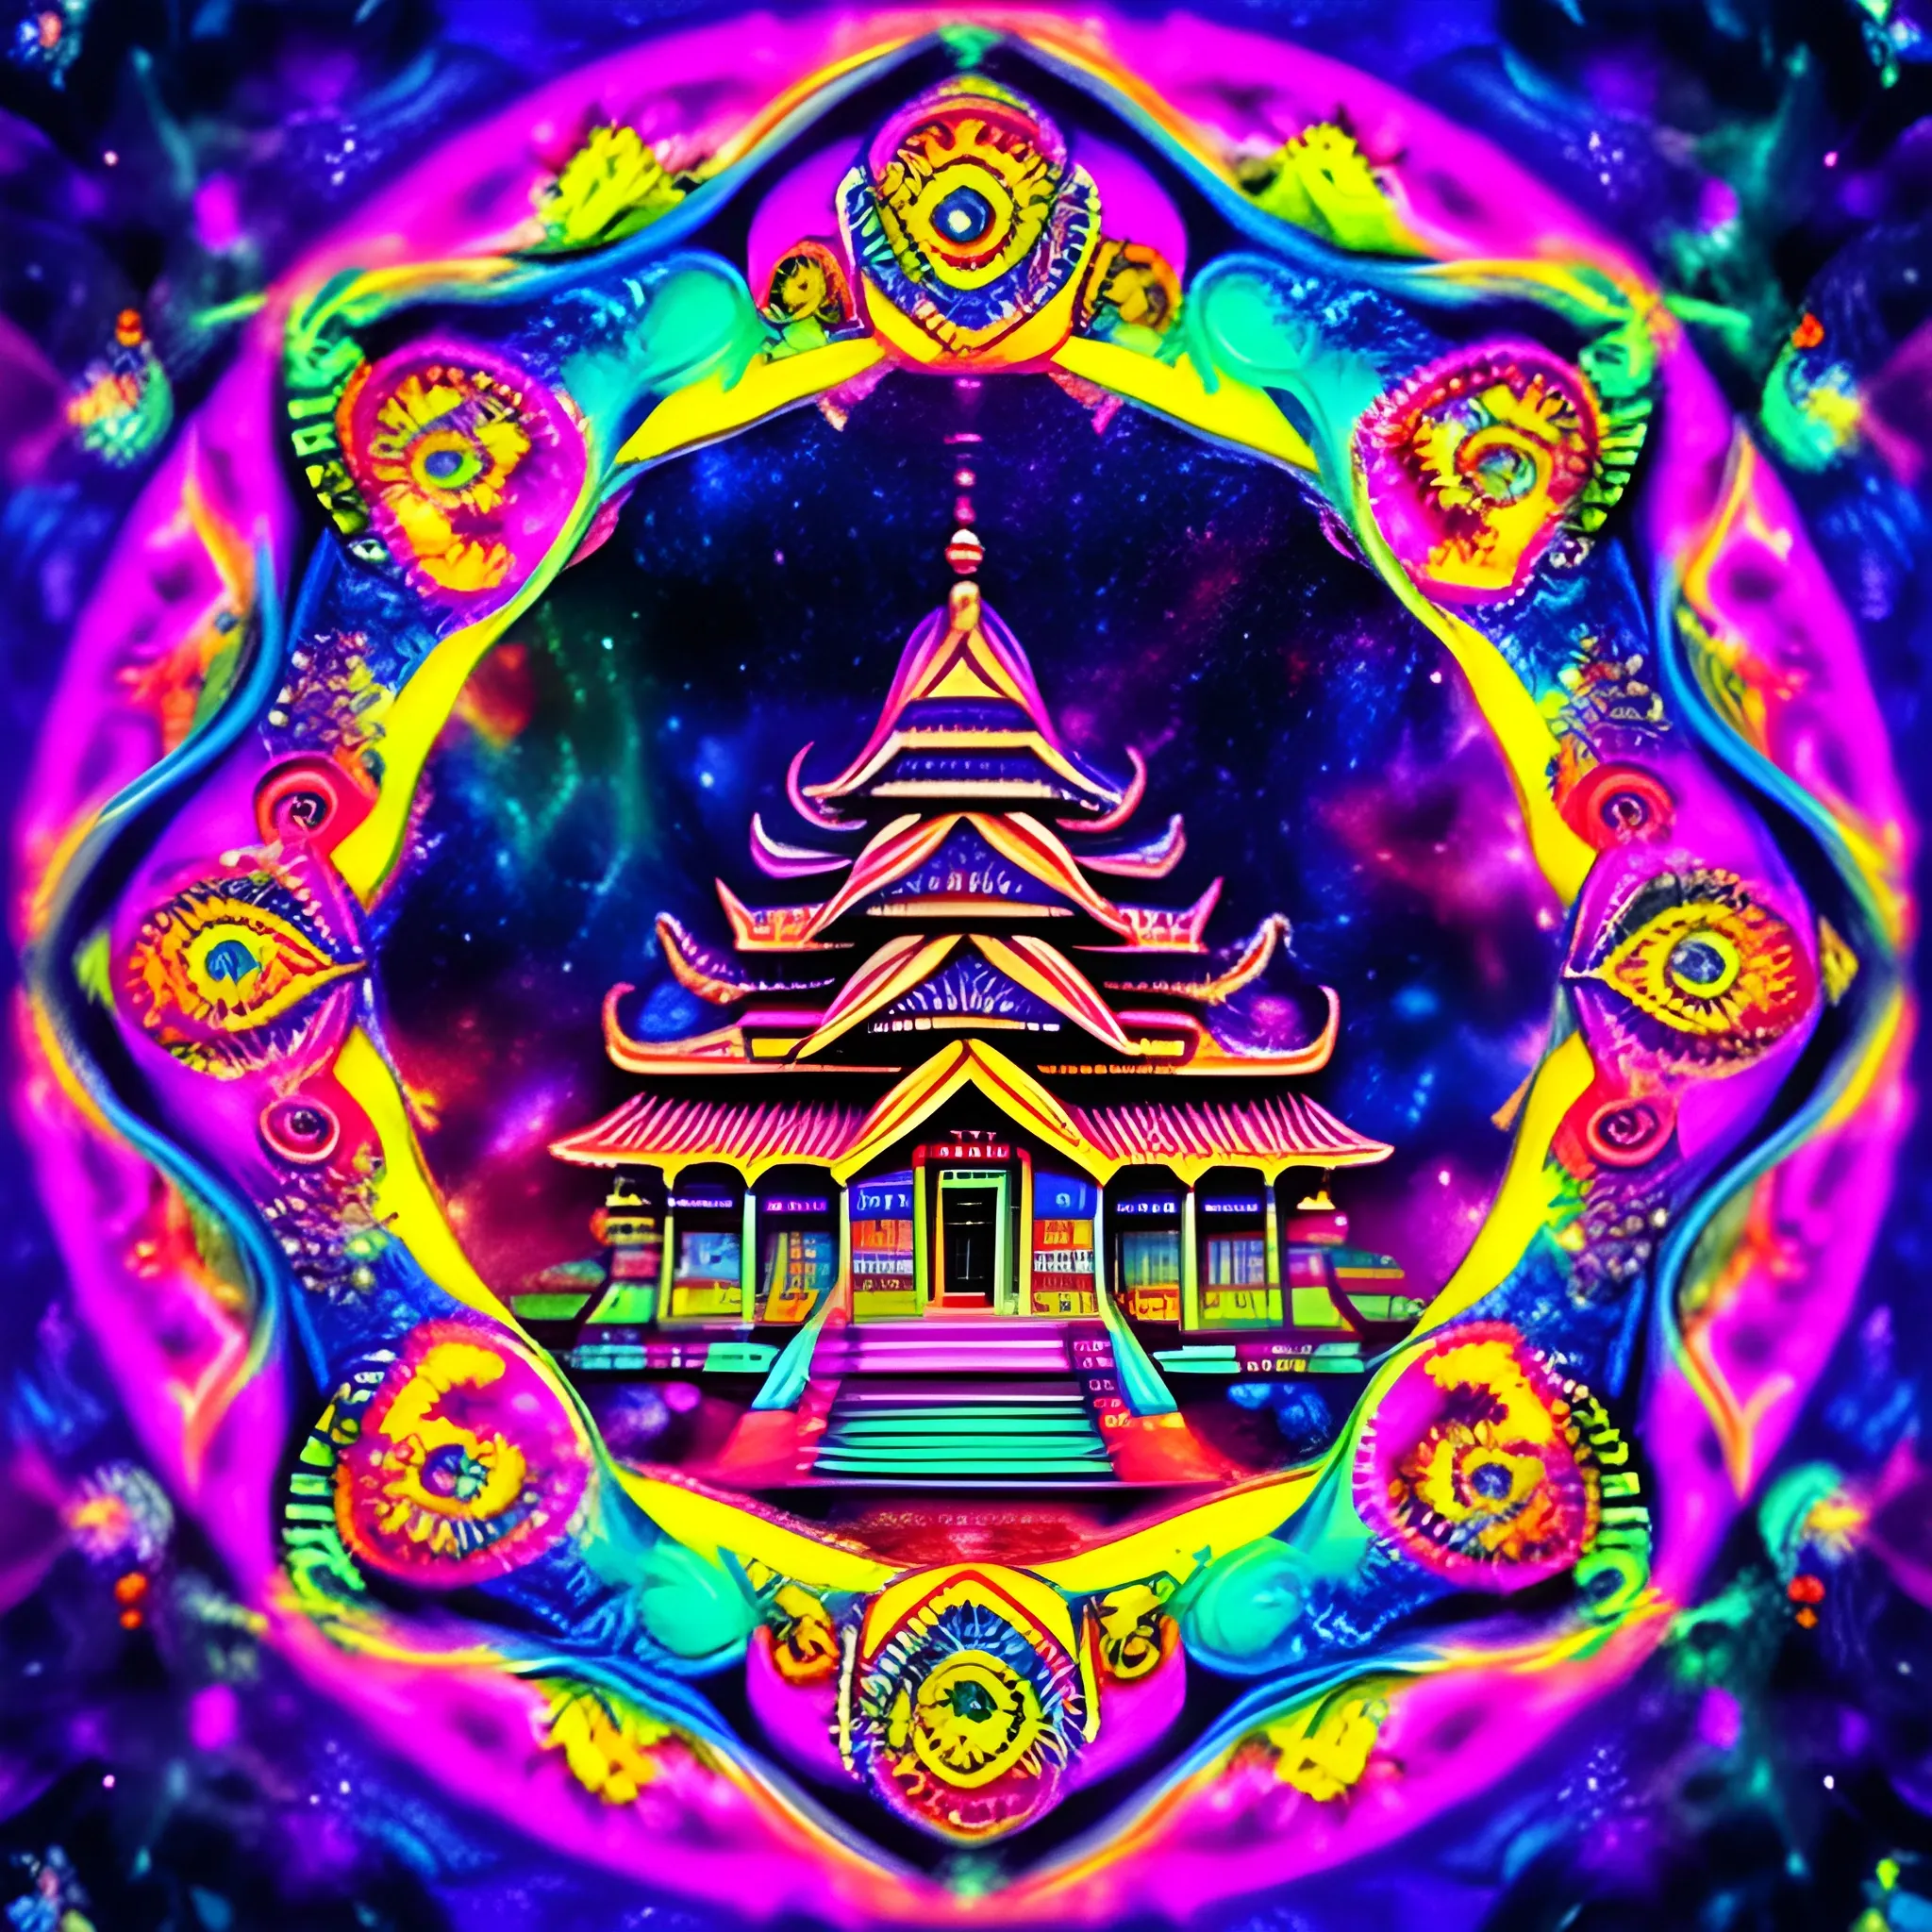 Trippy, temple, kru
, music, colorful, universe
